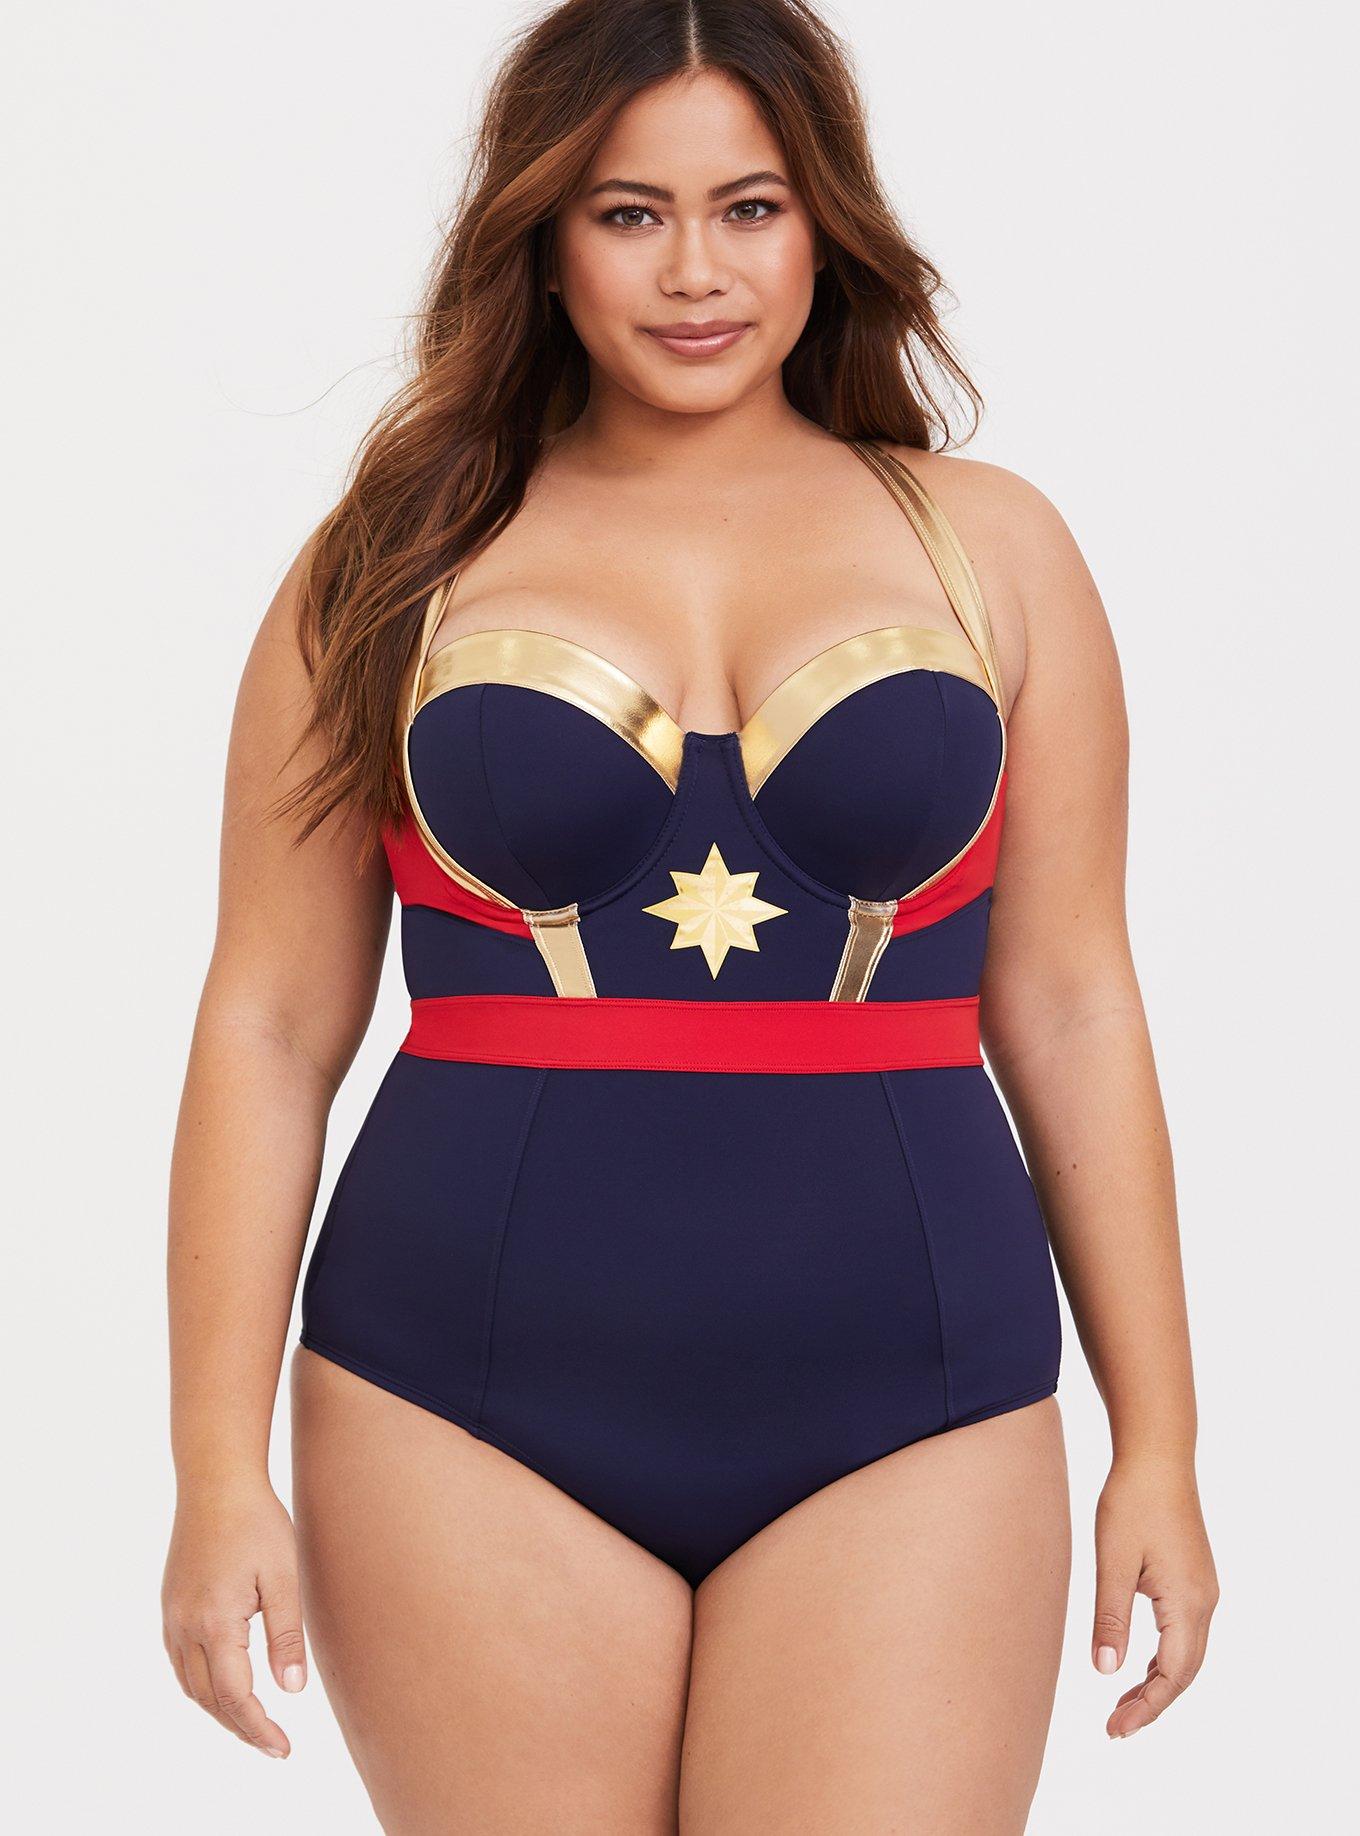 Plus Size - DC Comics Wonder Woman One-Piece Swim Dress - Torrid